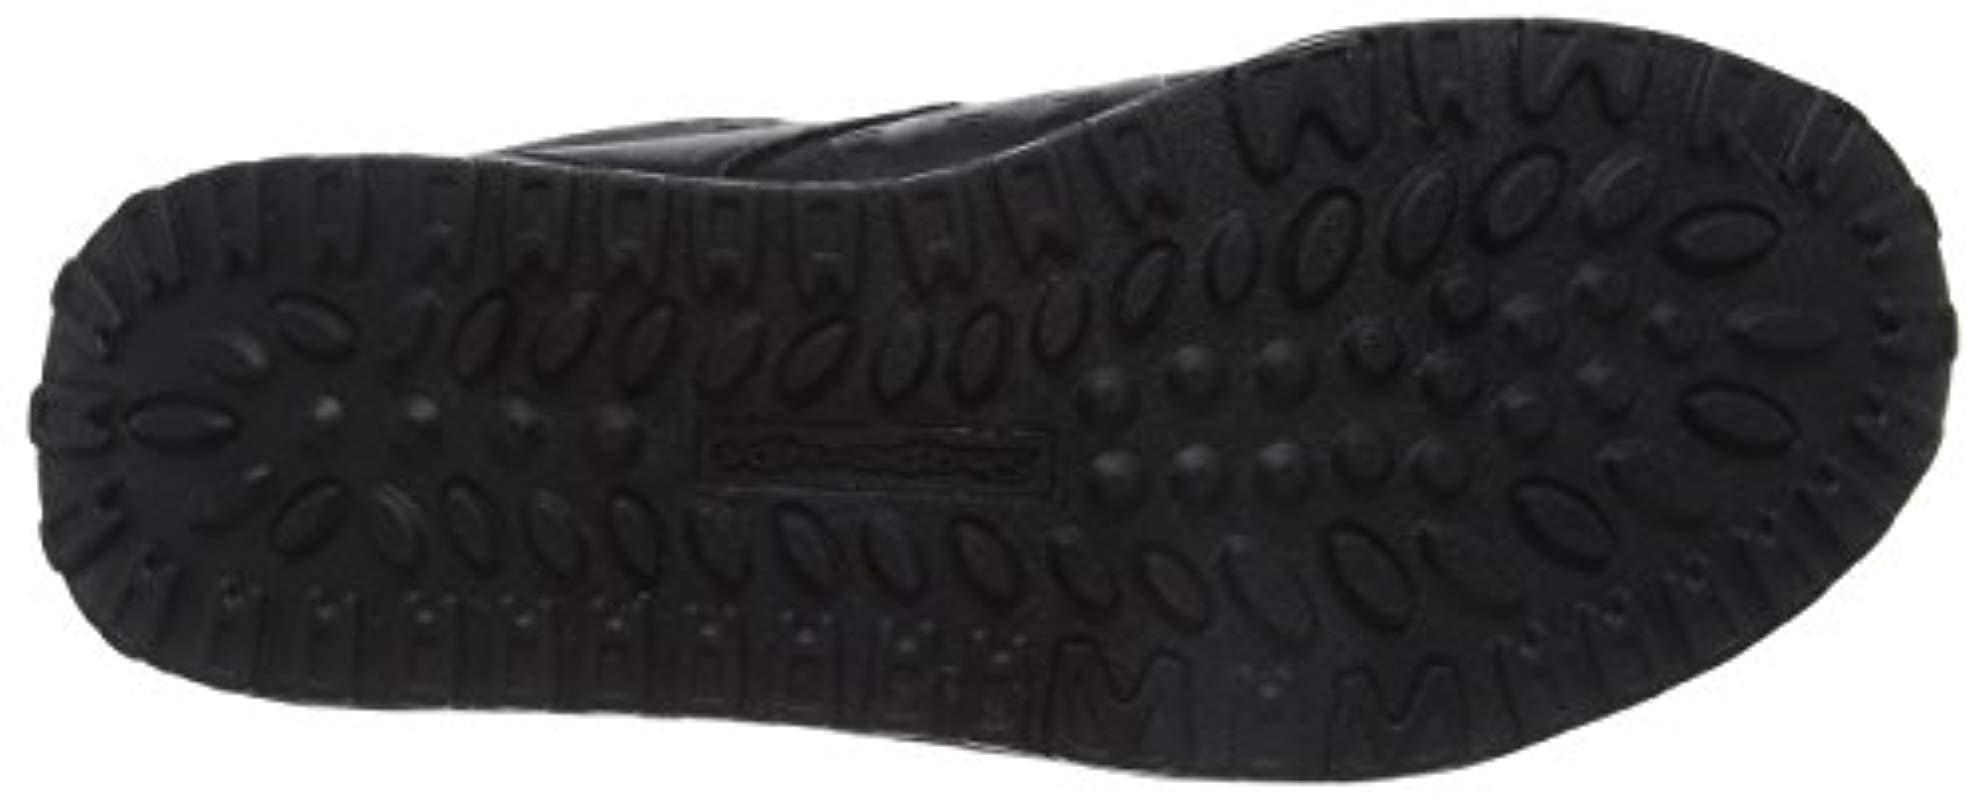 Skechers Shape Ups 2.0 Perfect Comfort Fashion Sneaker in Black | Lyst